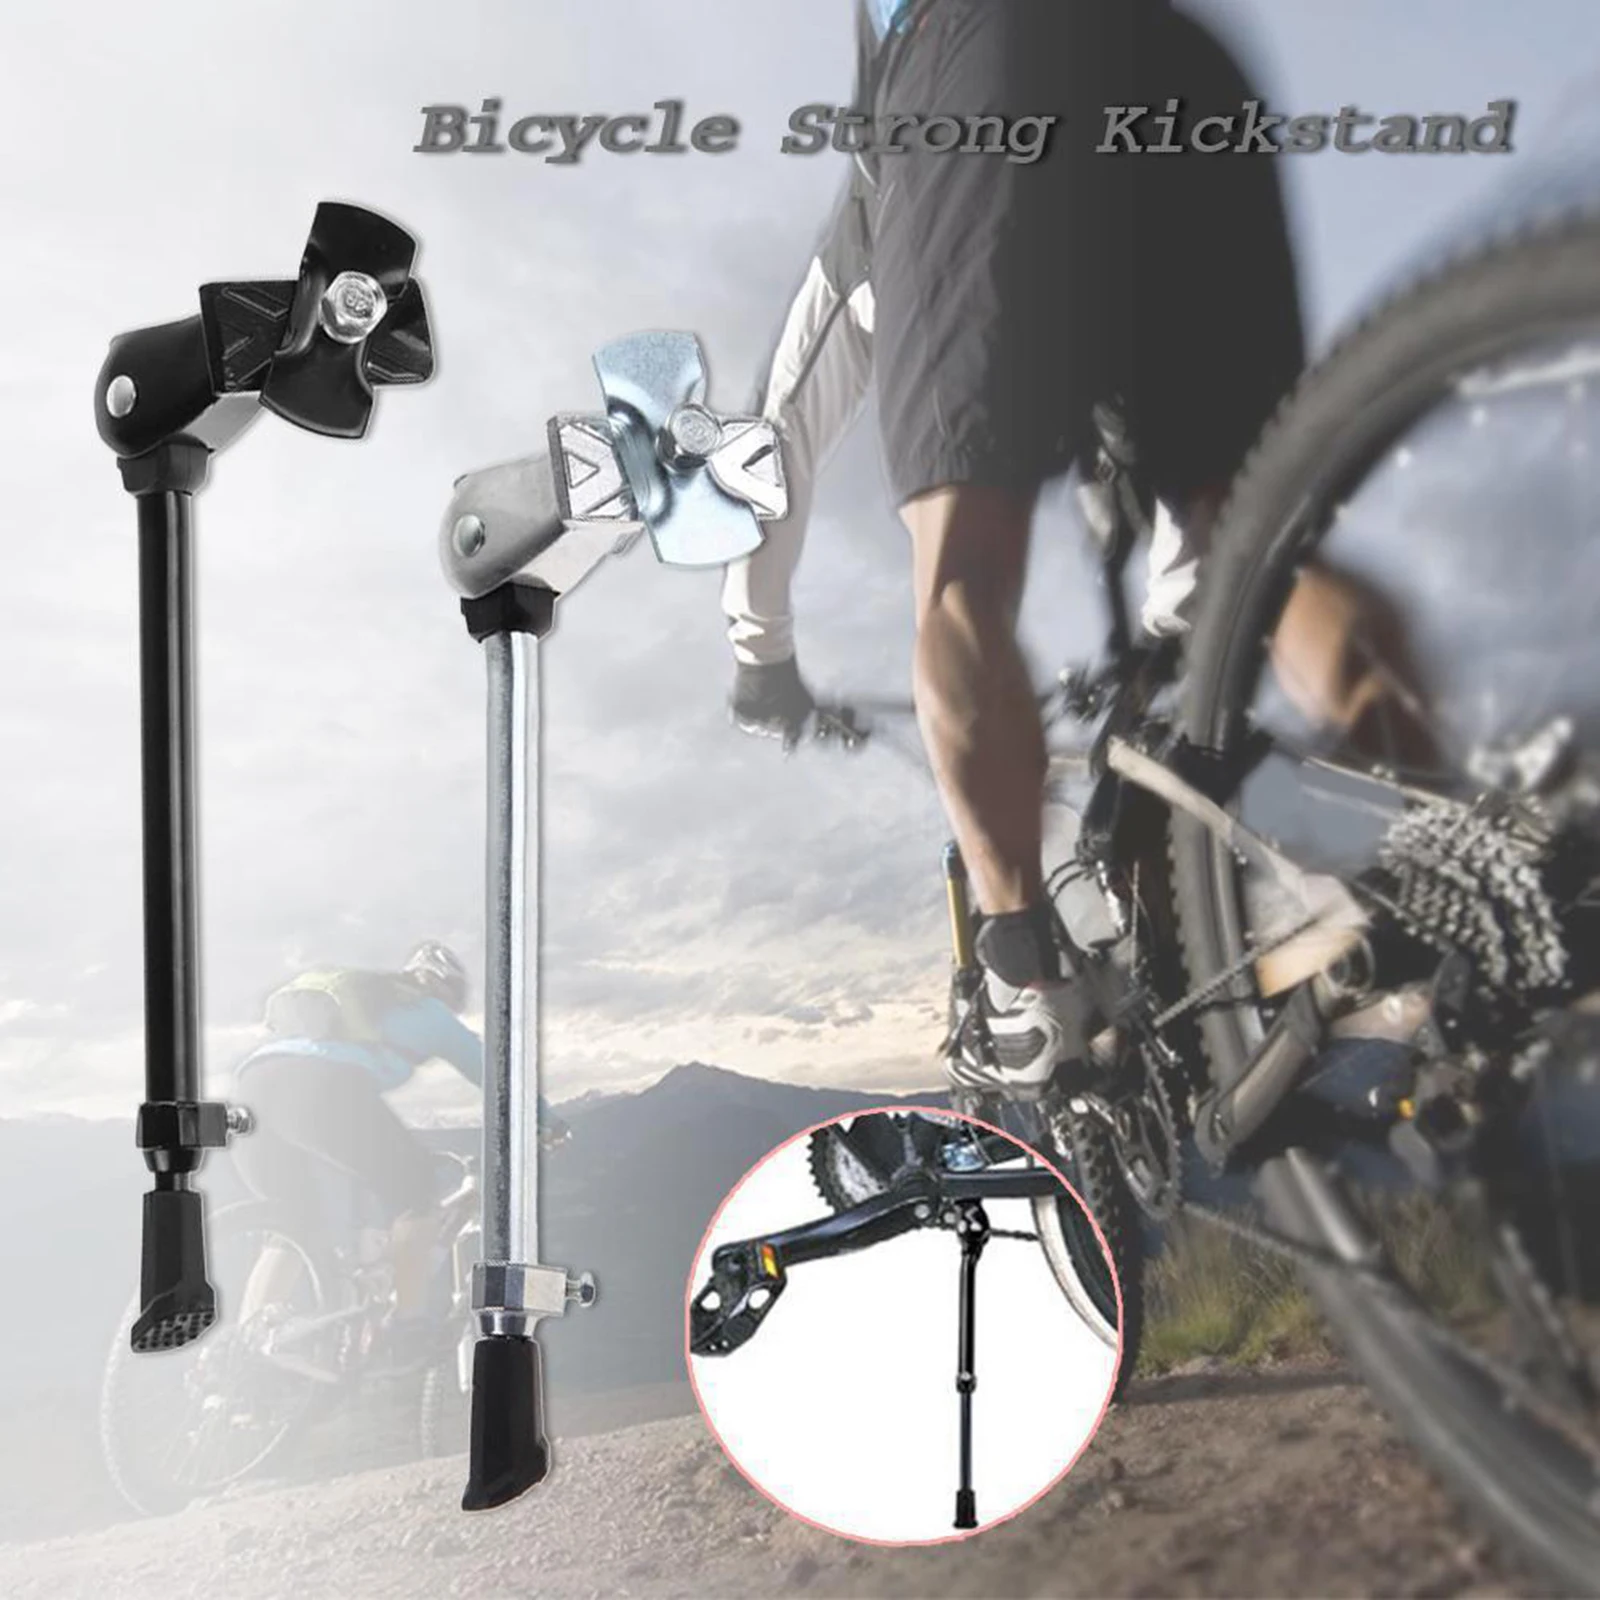 28cm / 11inch Length Mountain Bike Kickstand Rear Hub Mount Bracket Rustproof Single Leg Bracket Bicycle Side Kickstand